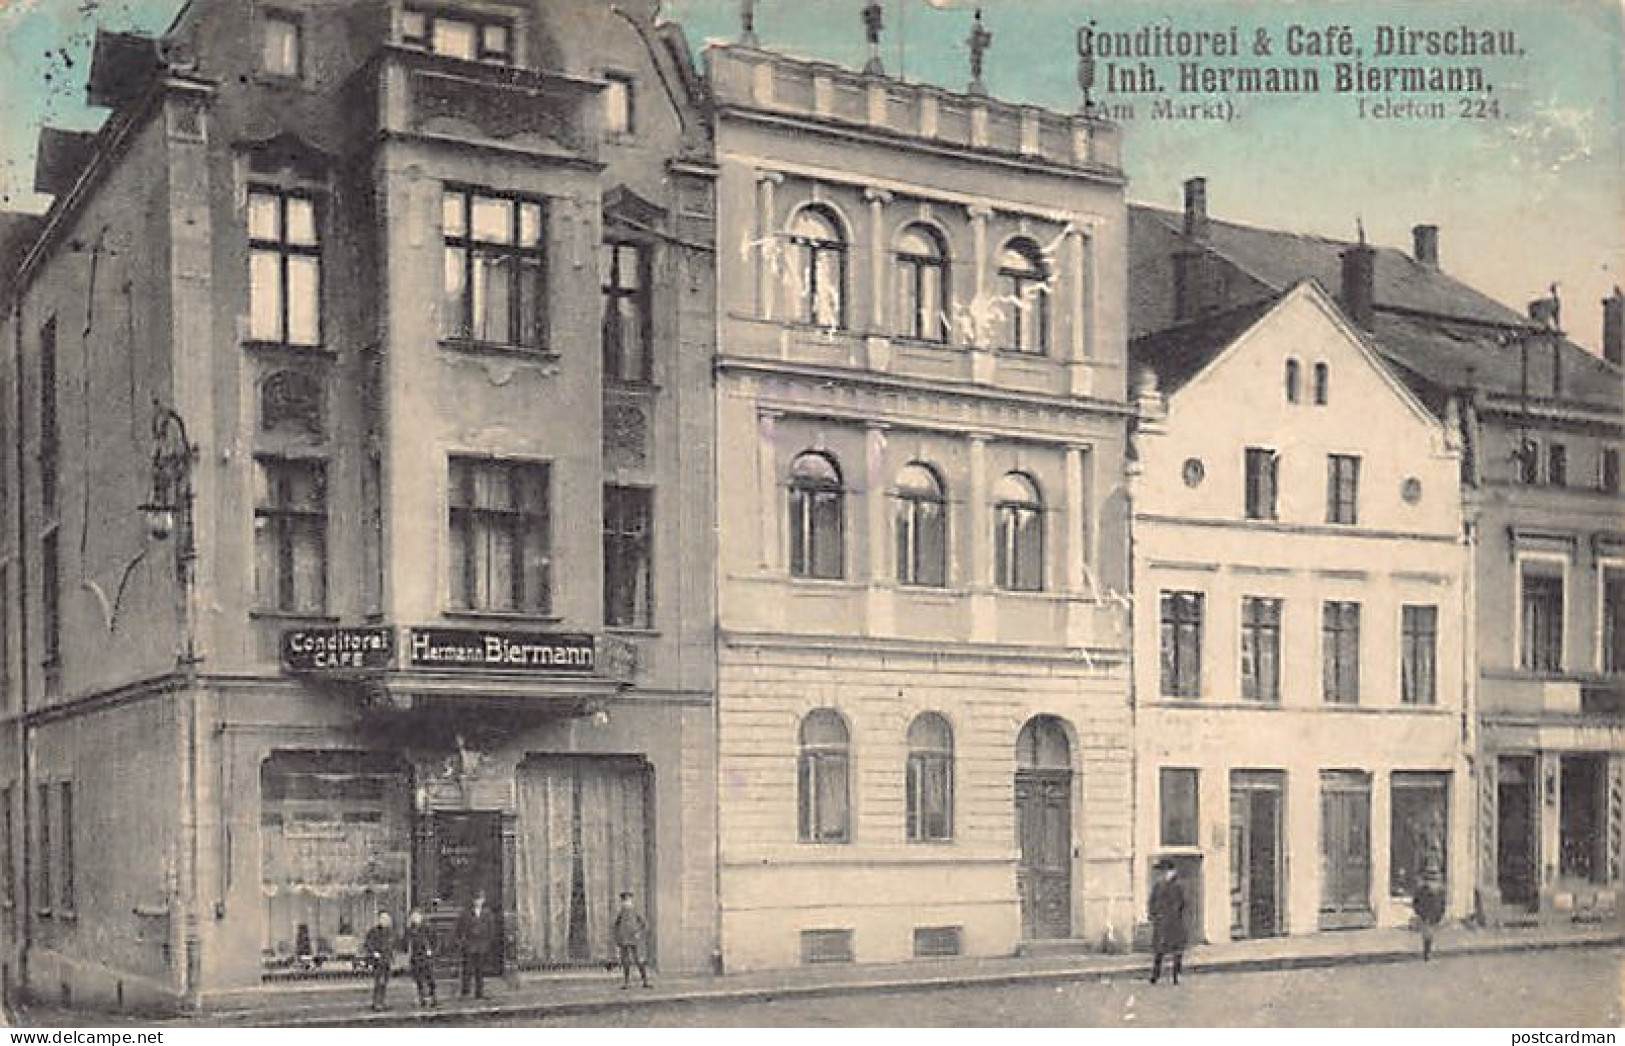 POLSKA Poland - TCZEW Dirschau - Conditorei & Café - Inh. Hermann Biermann - Am Markt - Polen